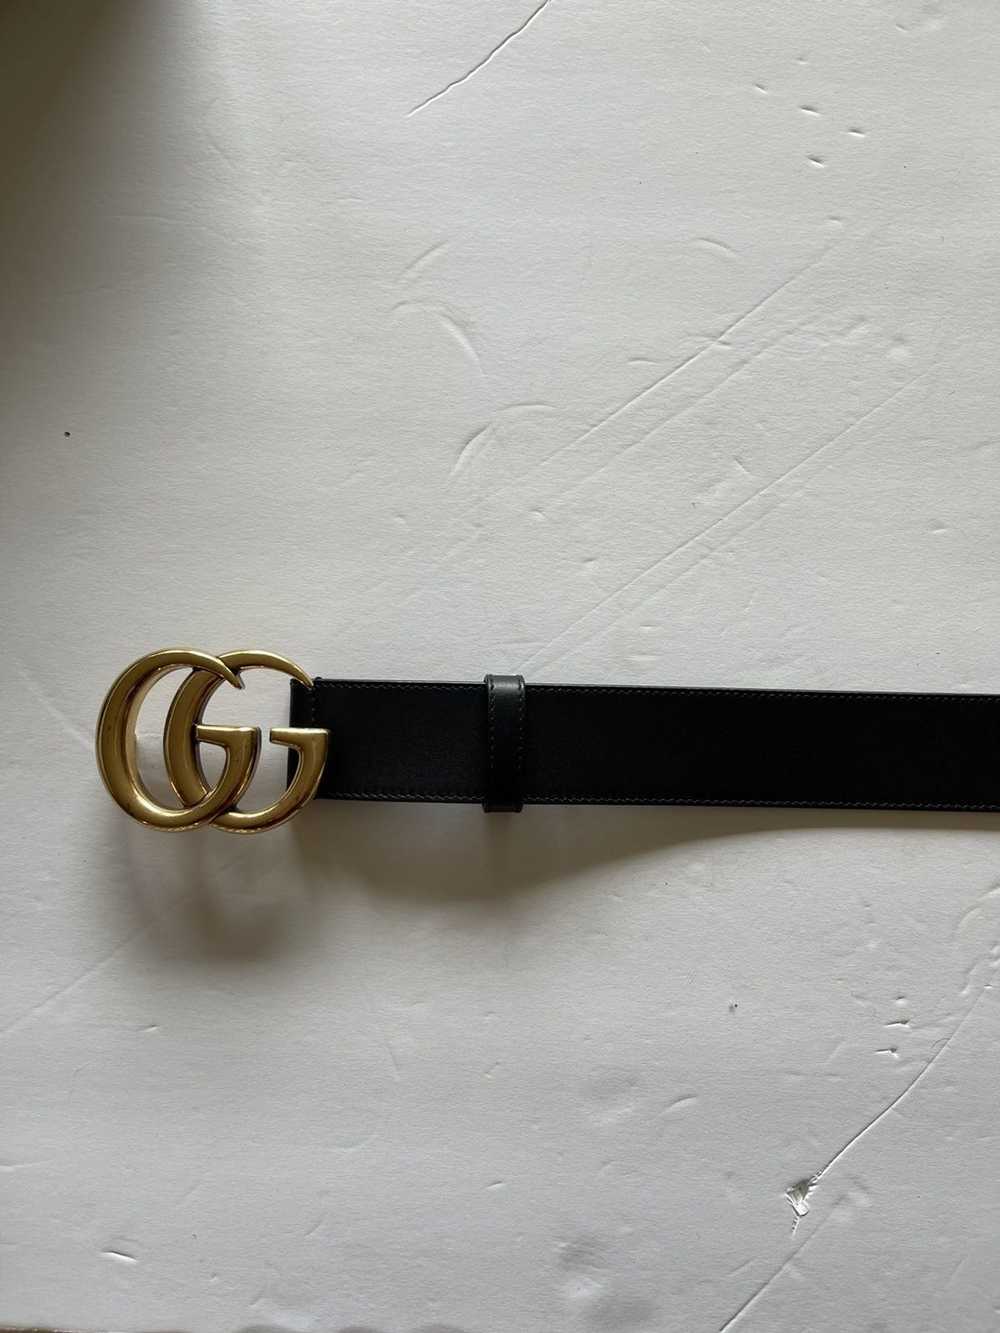 gucci belt men black leather signature size 32 monogrammed print